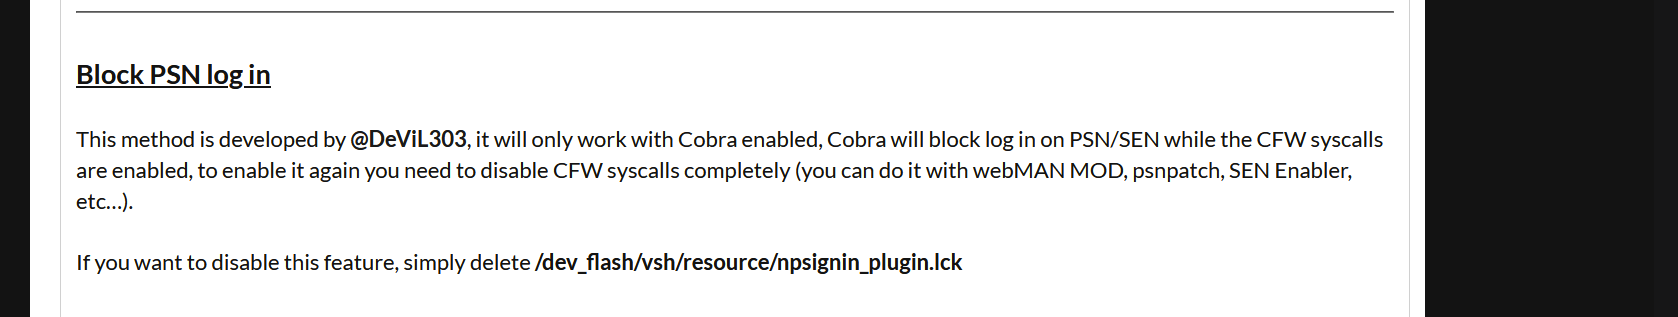 PS3 - webMAN MOD not working on PS3 Slim CFW 4.90 Evilnat Cobra